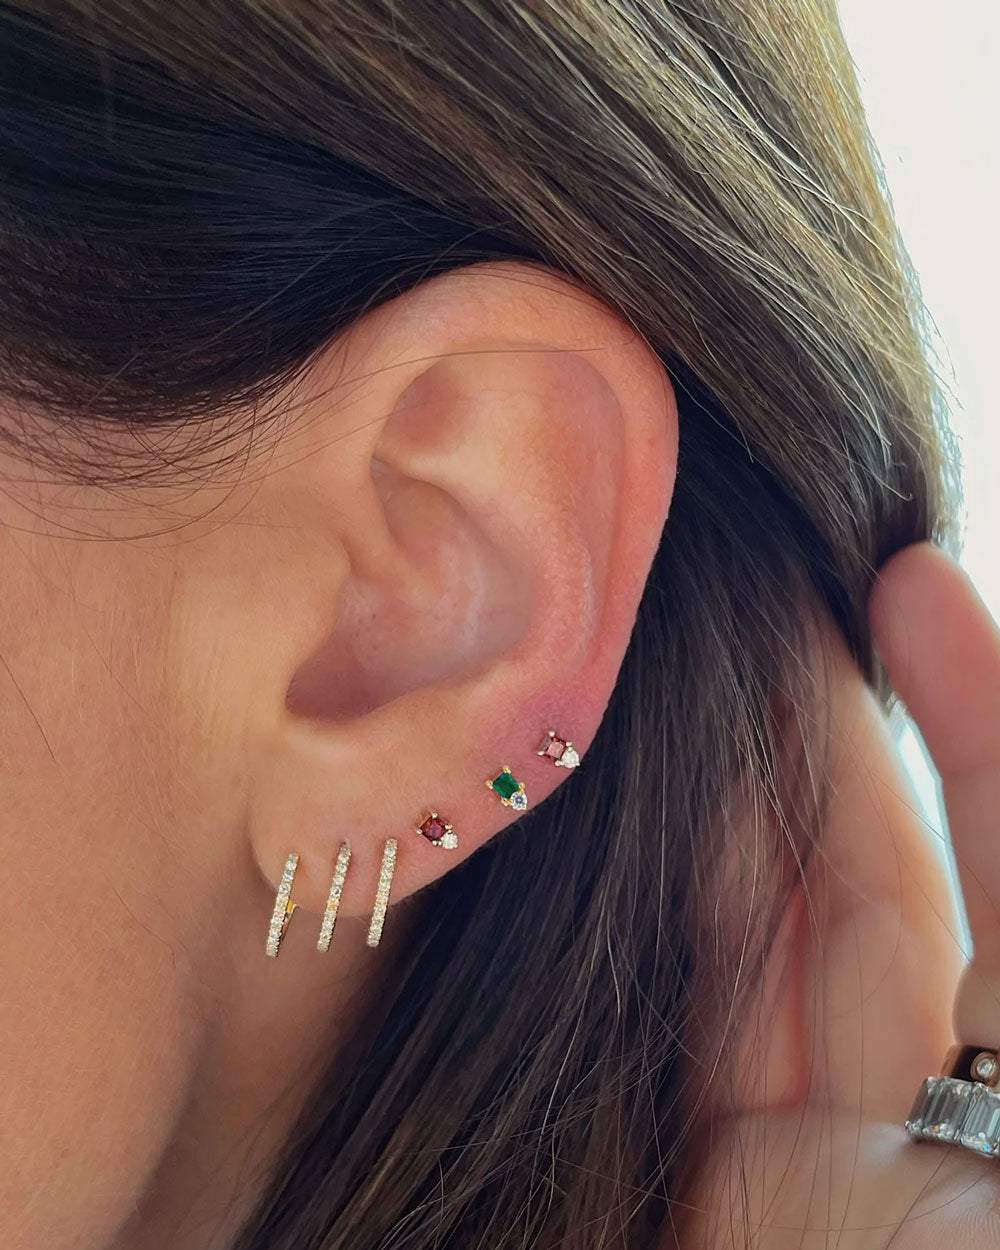 14k Yellow Gold Birthstone Emerald Stud Earrings